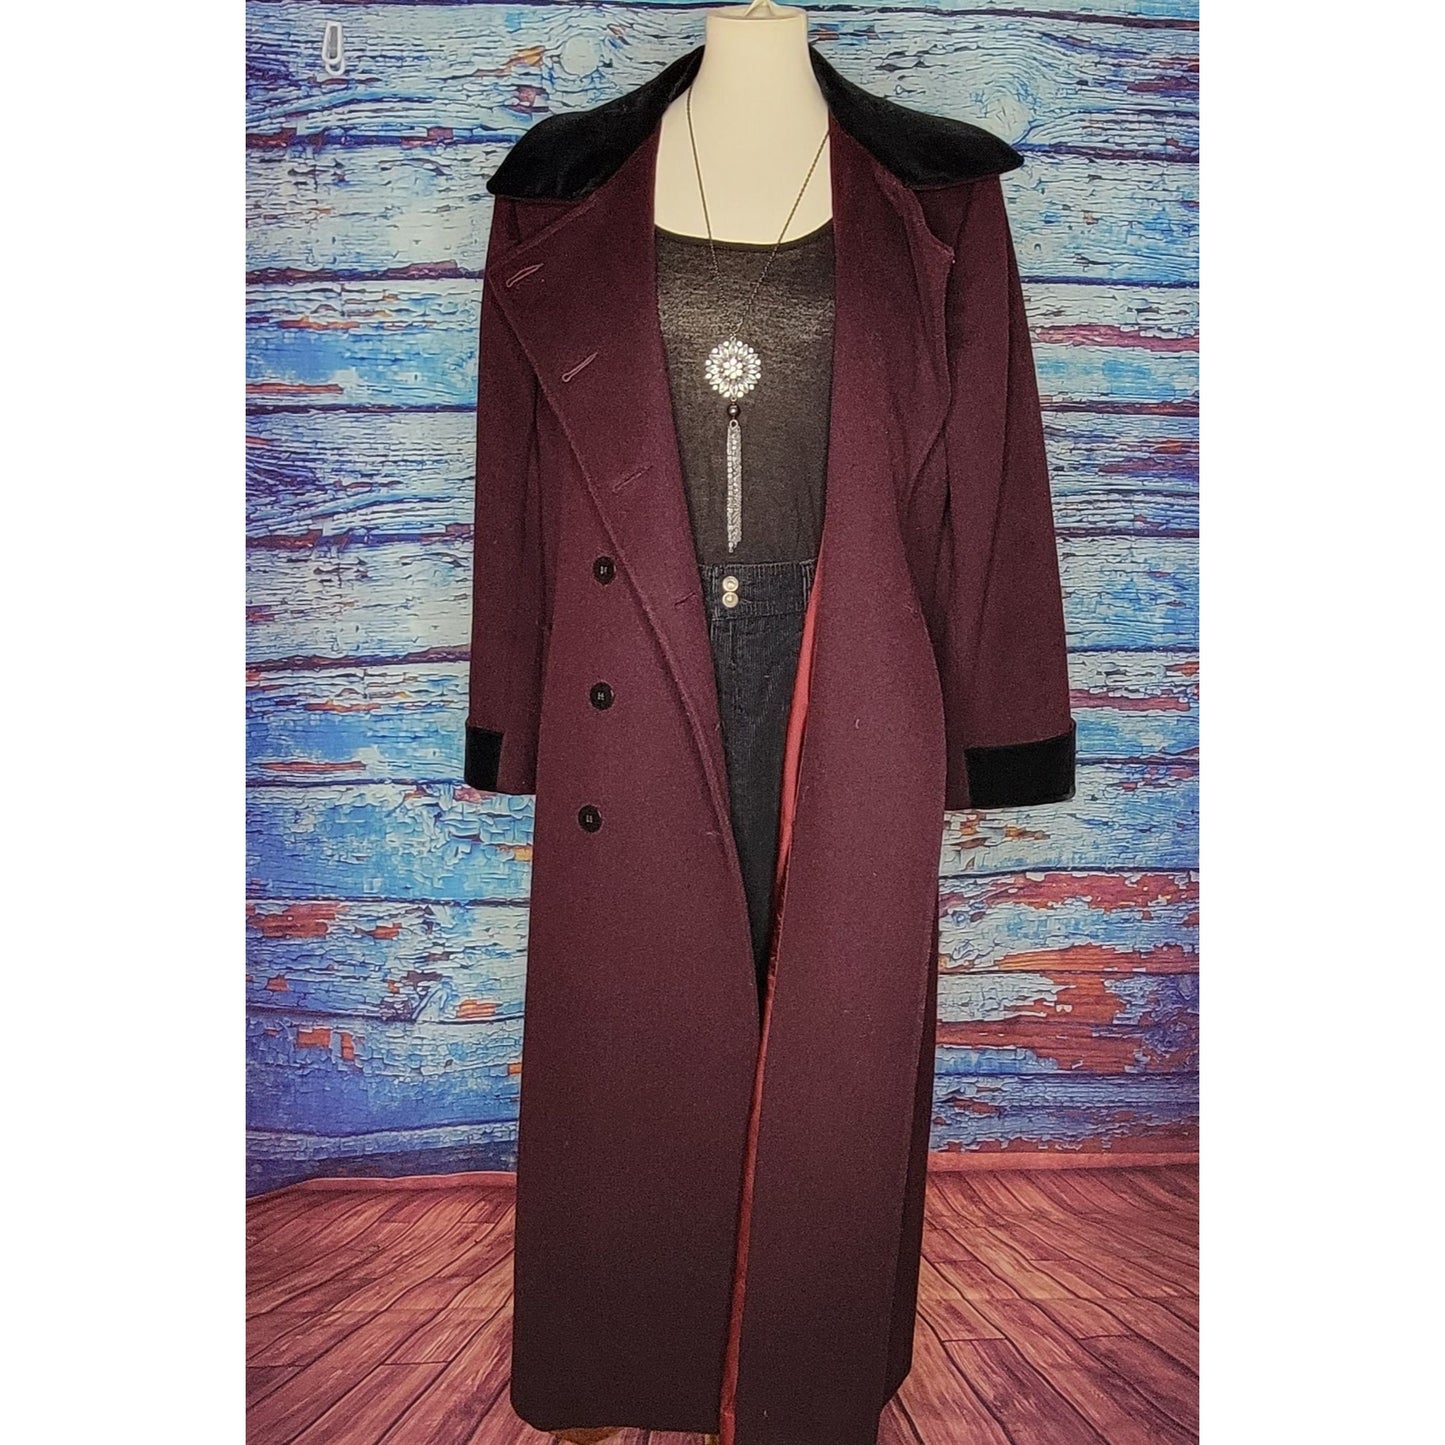 VTG Full Length Plum Colored Wool Coat w/ Velour collar and sleeves